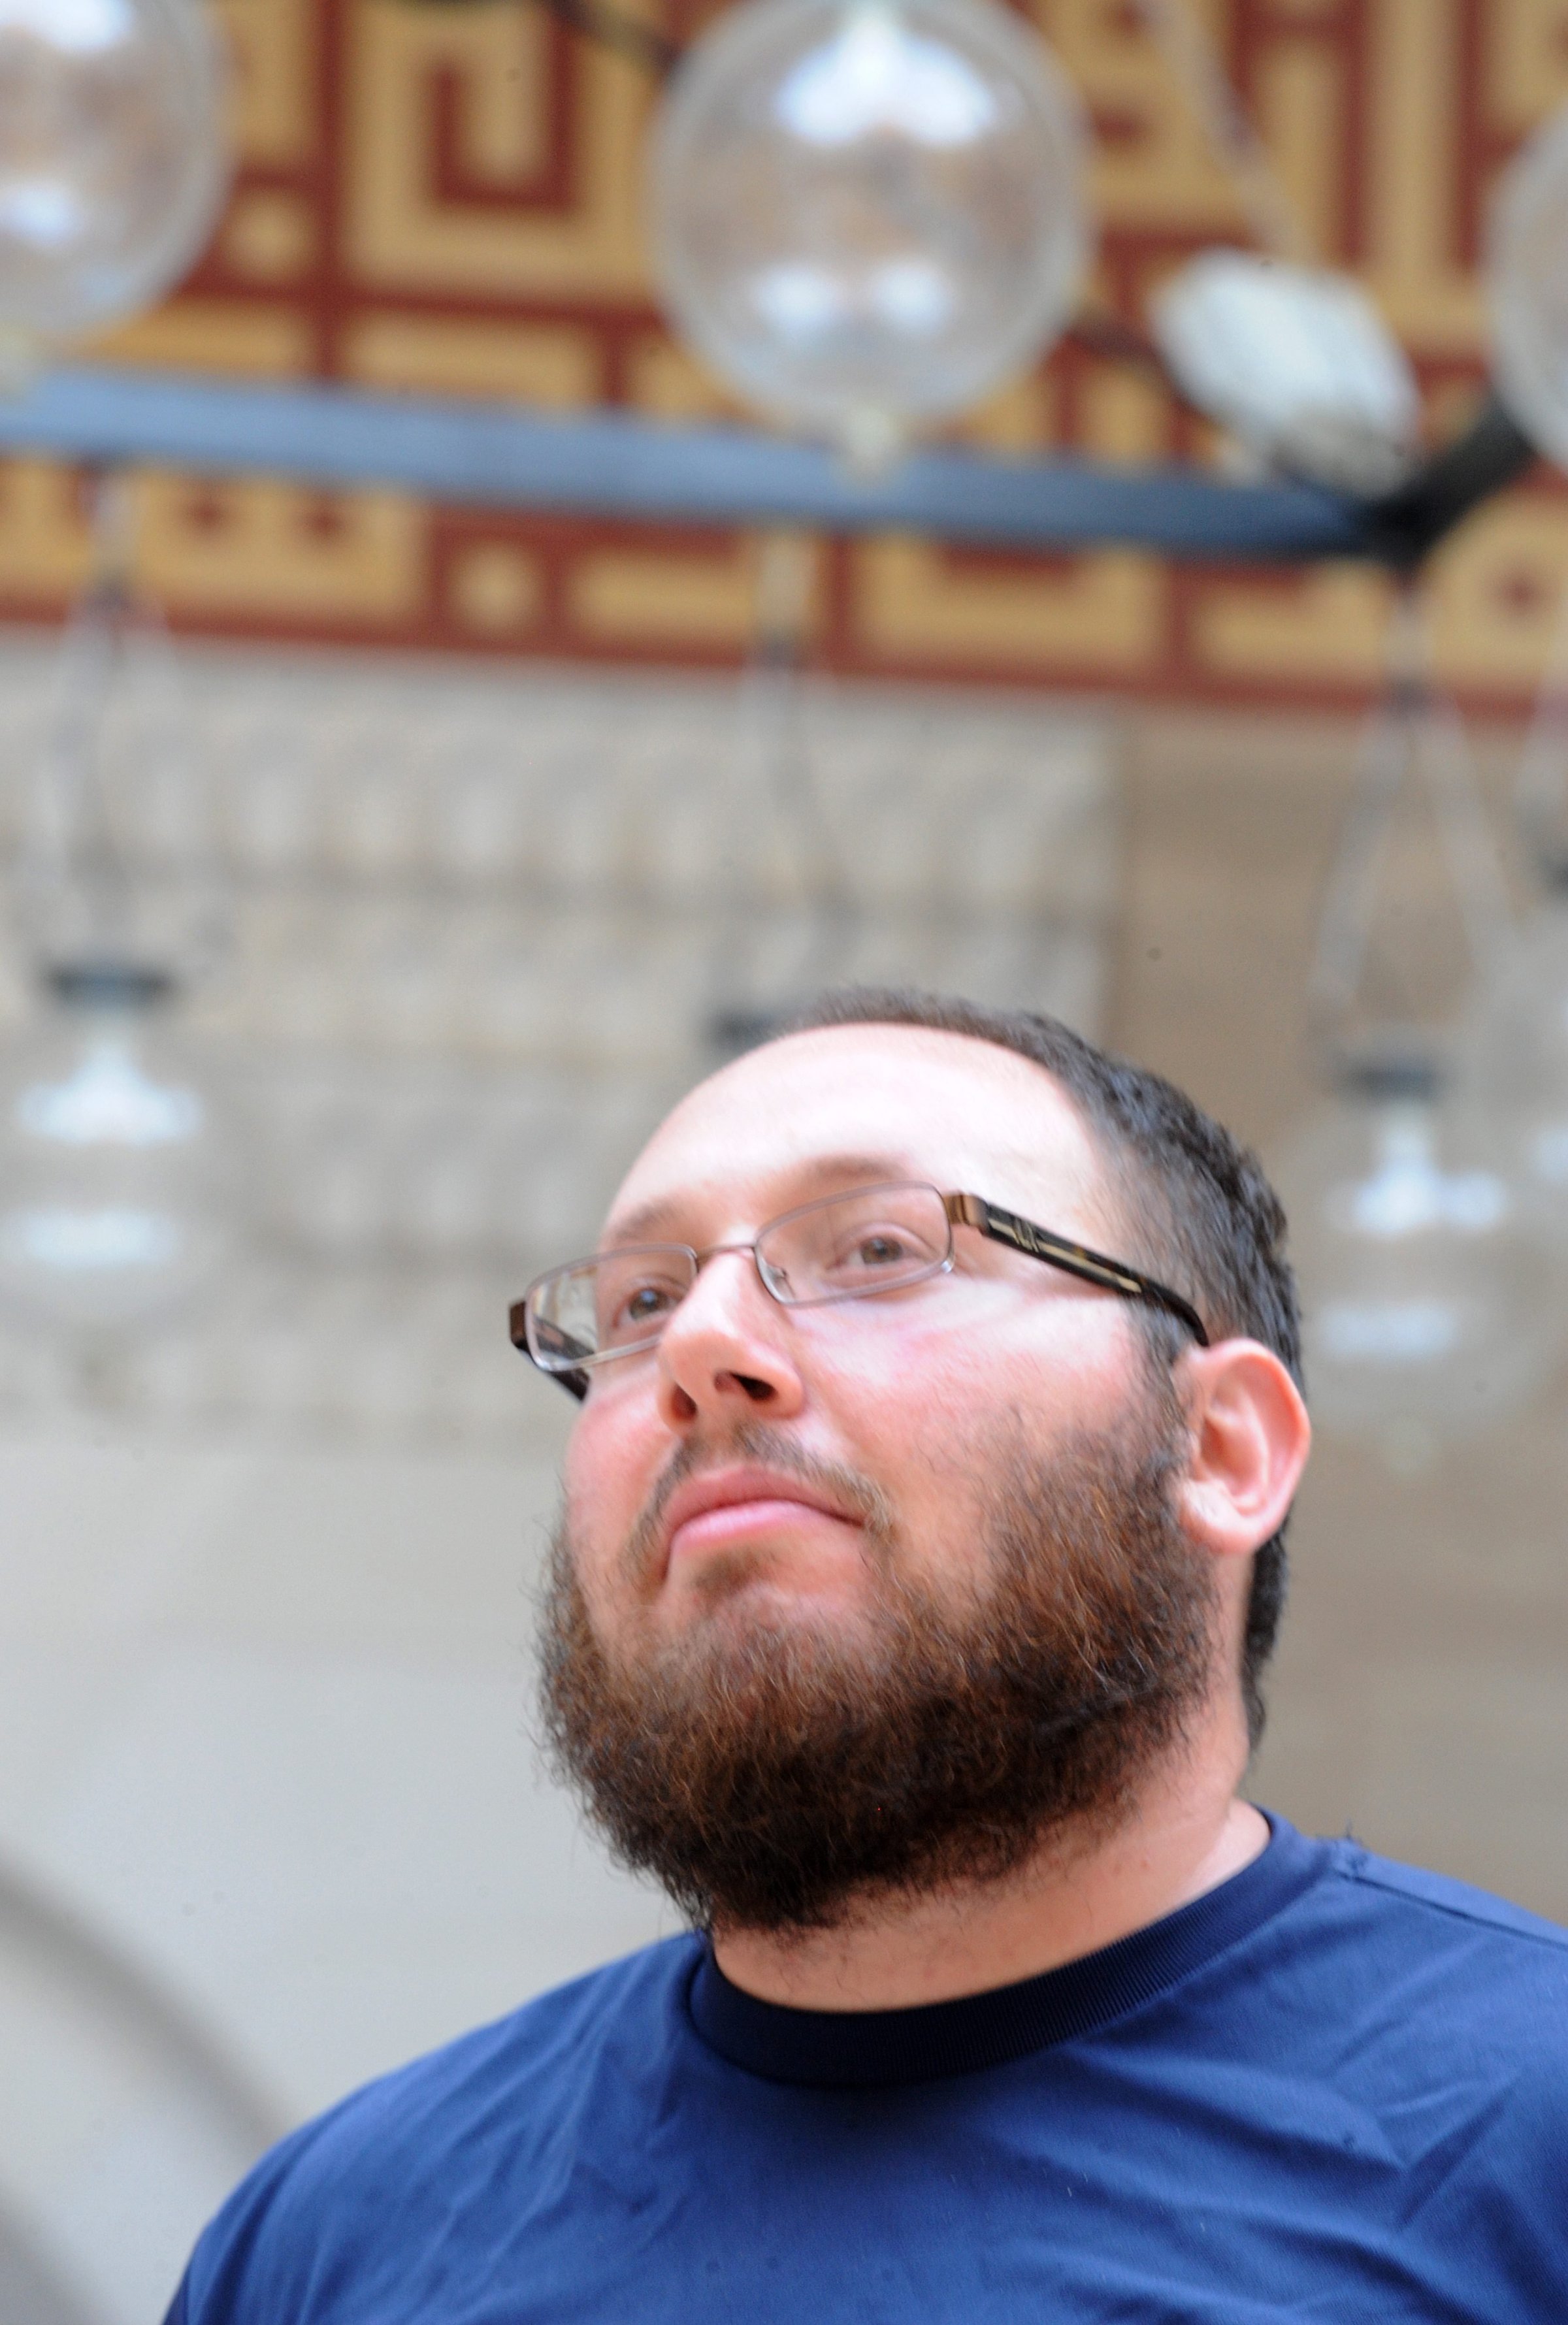 US freelance journalist Steven Sotloff during a work trip inside Al-Fateh Mosque in Manama, Bahrain on October 26, 2010.